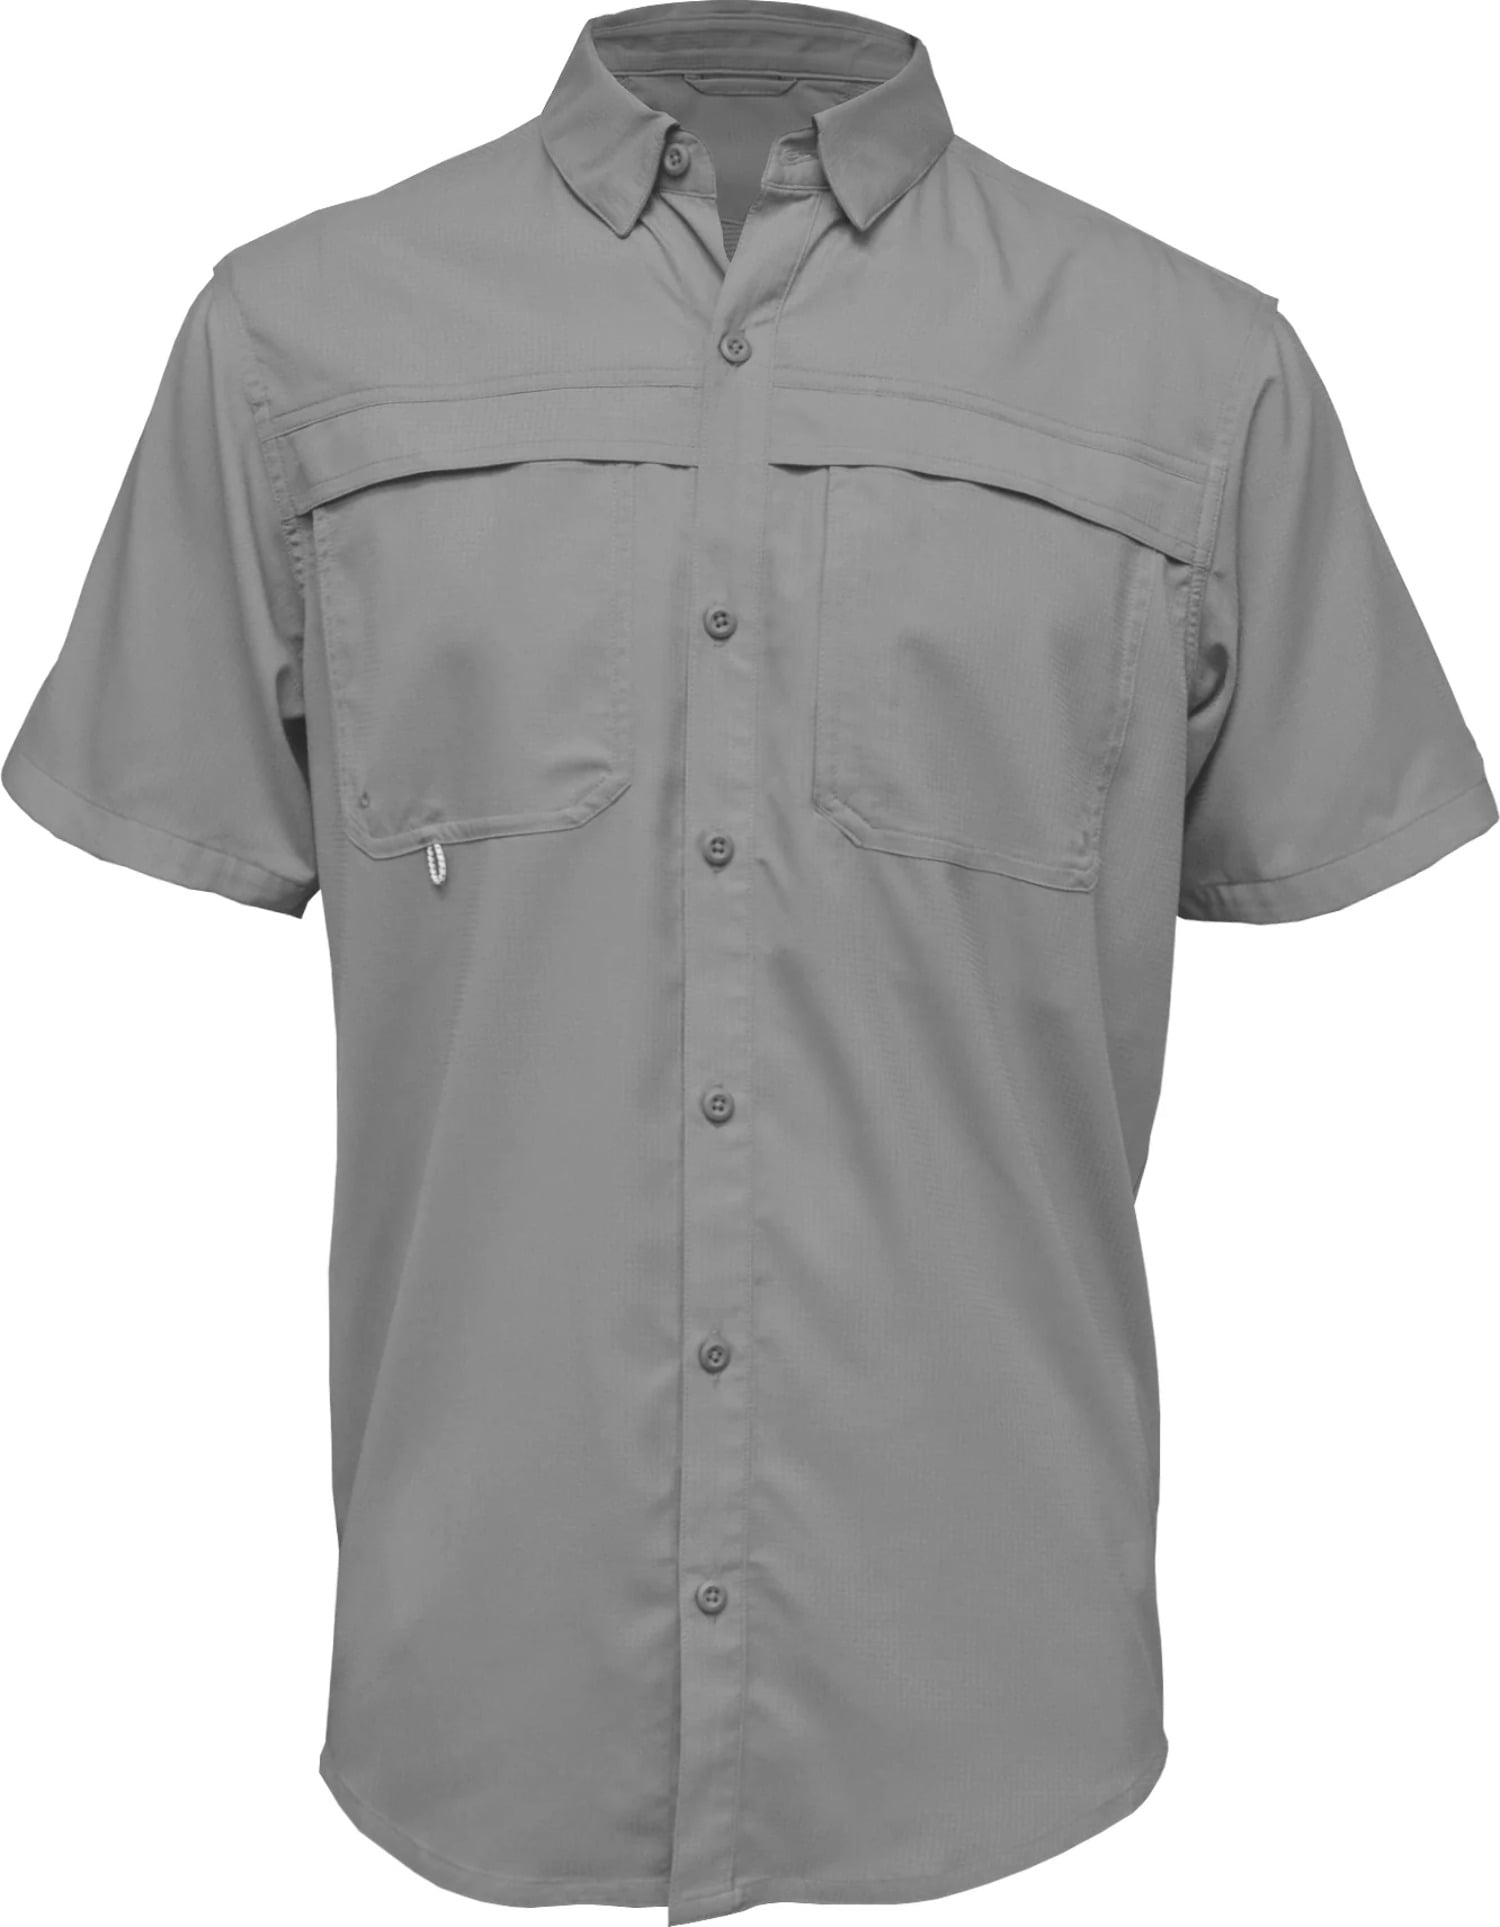 Mojo Sportswear Men's Short Sleeve SoWal TFS, Size: Medium, Yellow